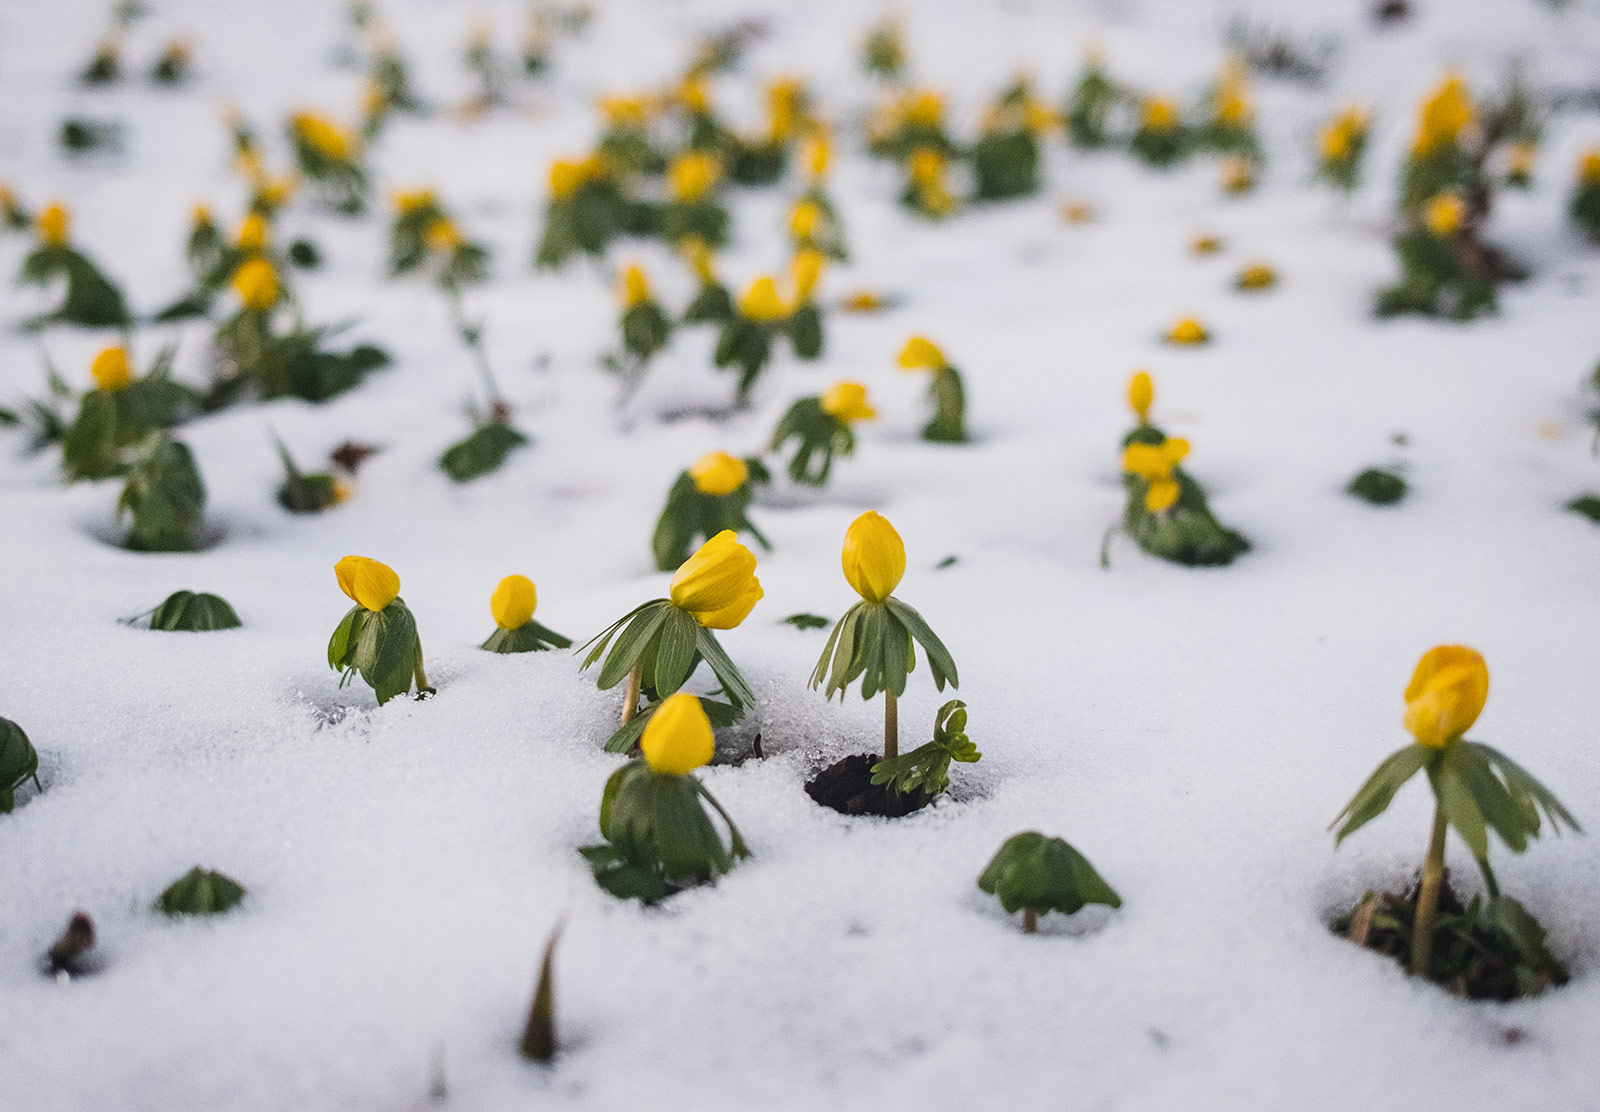 Flowers poking through snow on the ground